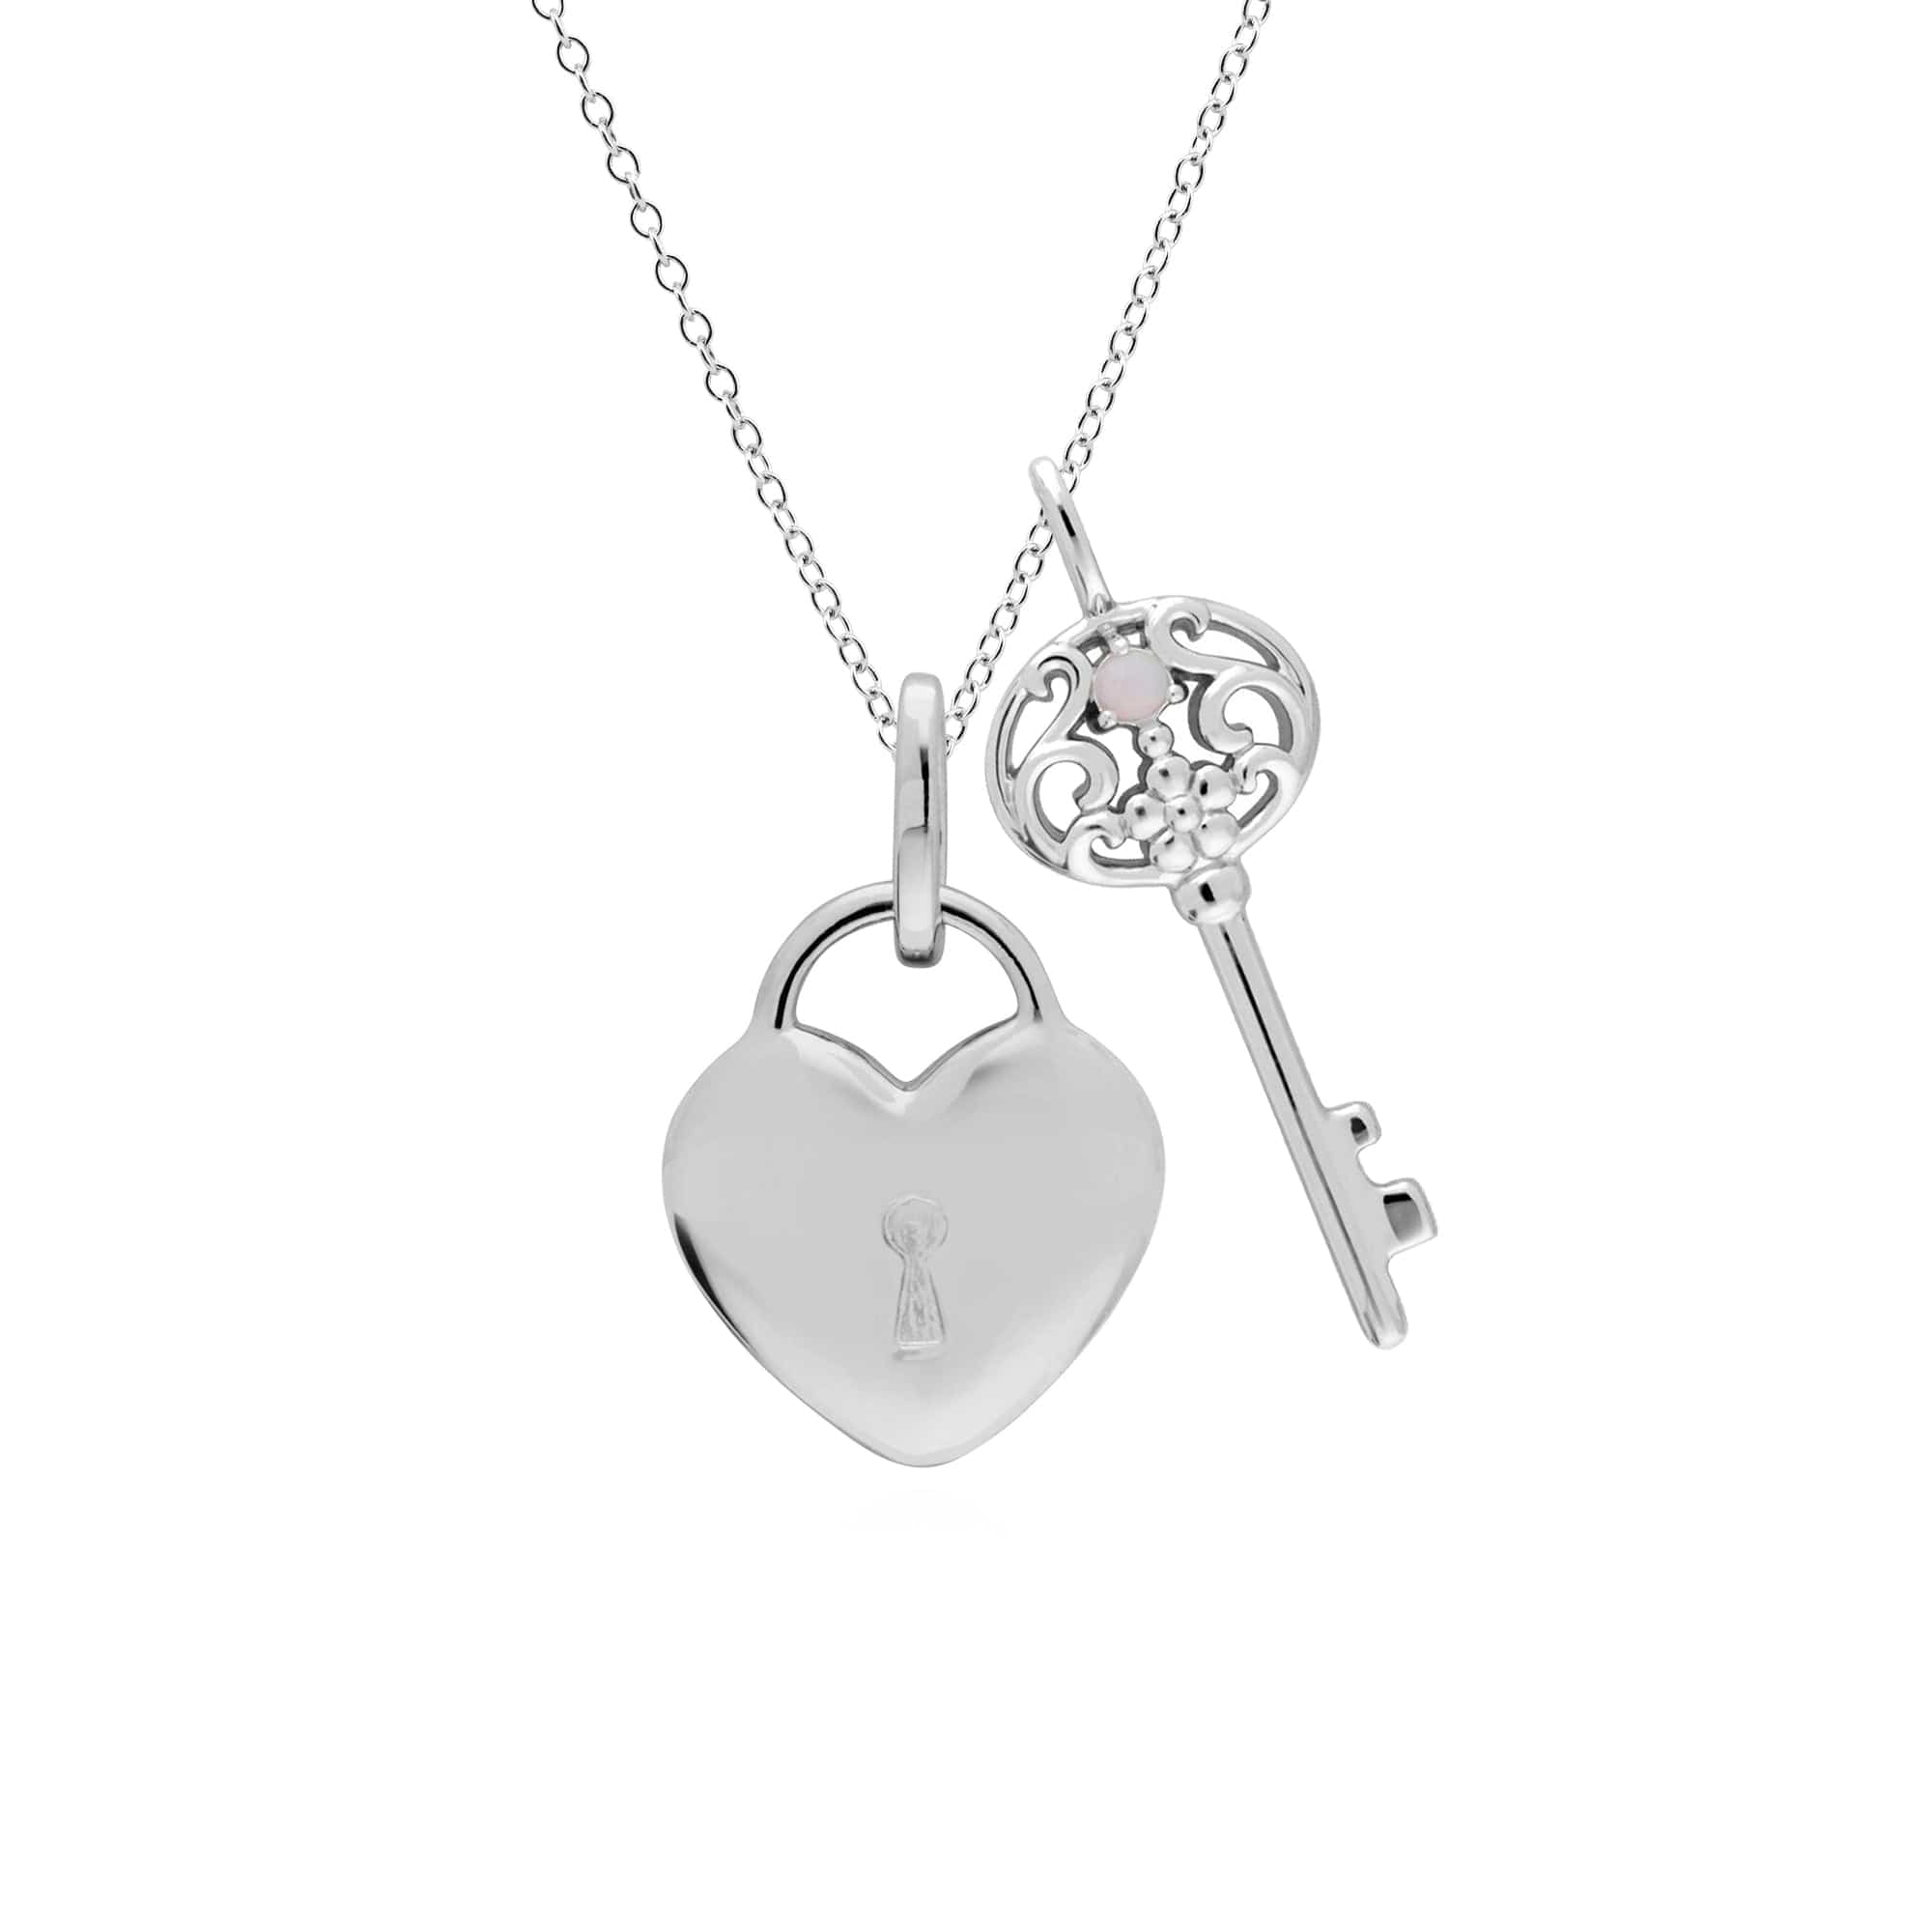 270P026803925-270P027001925 Classic Heart Lock Pendant & Opal Big Key Charm in 925 Sterling Silver 1